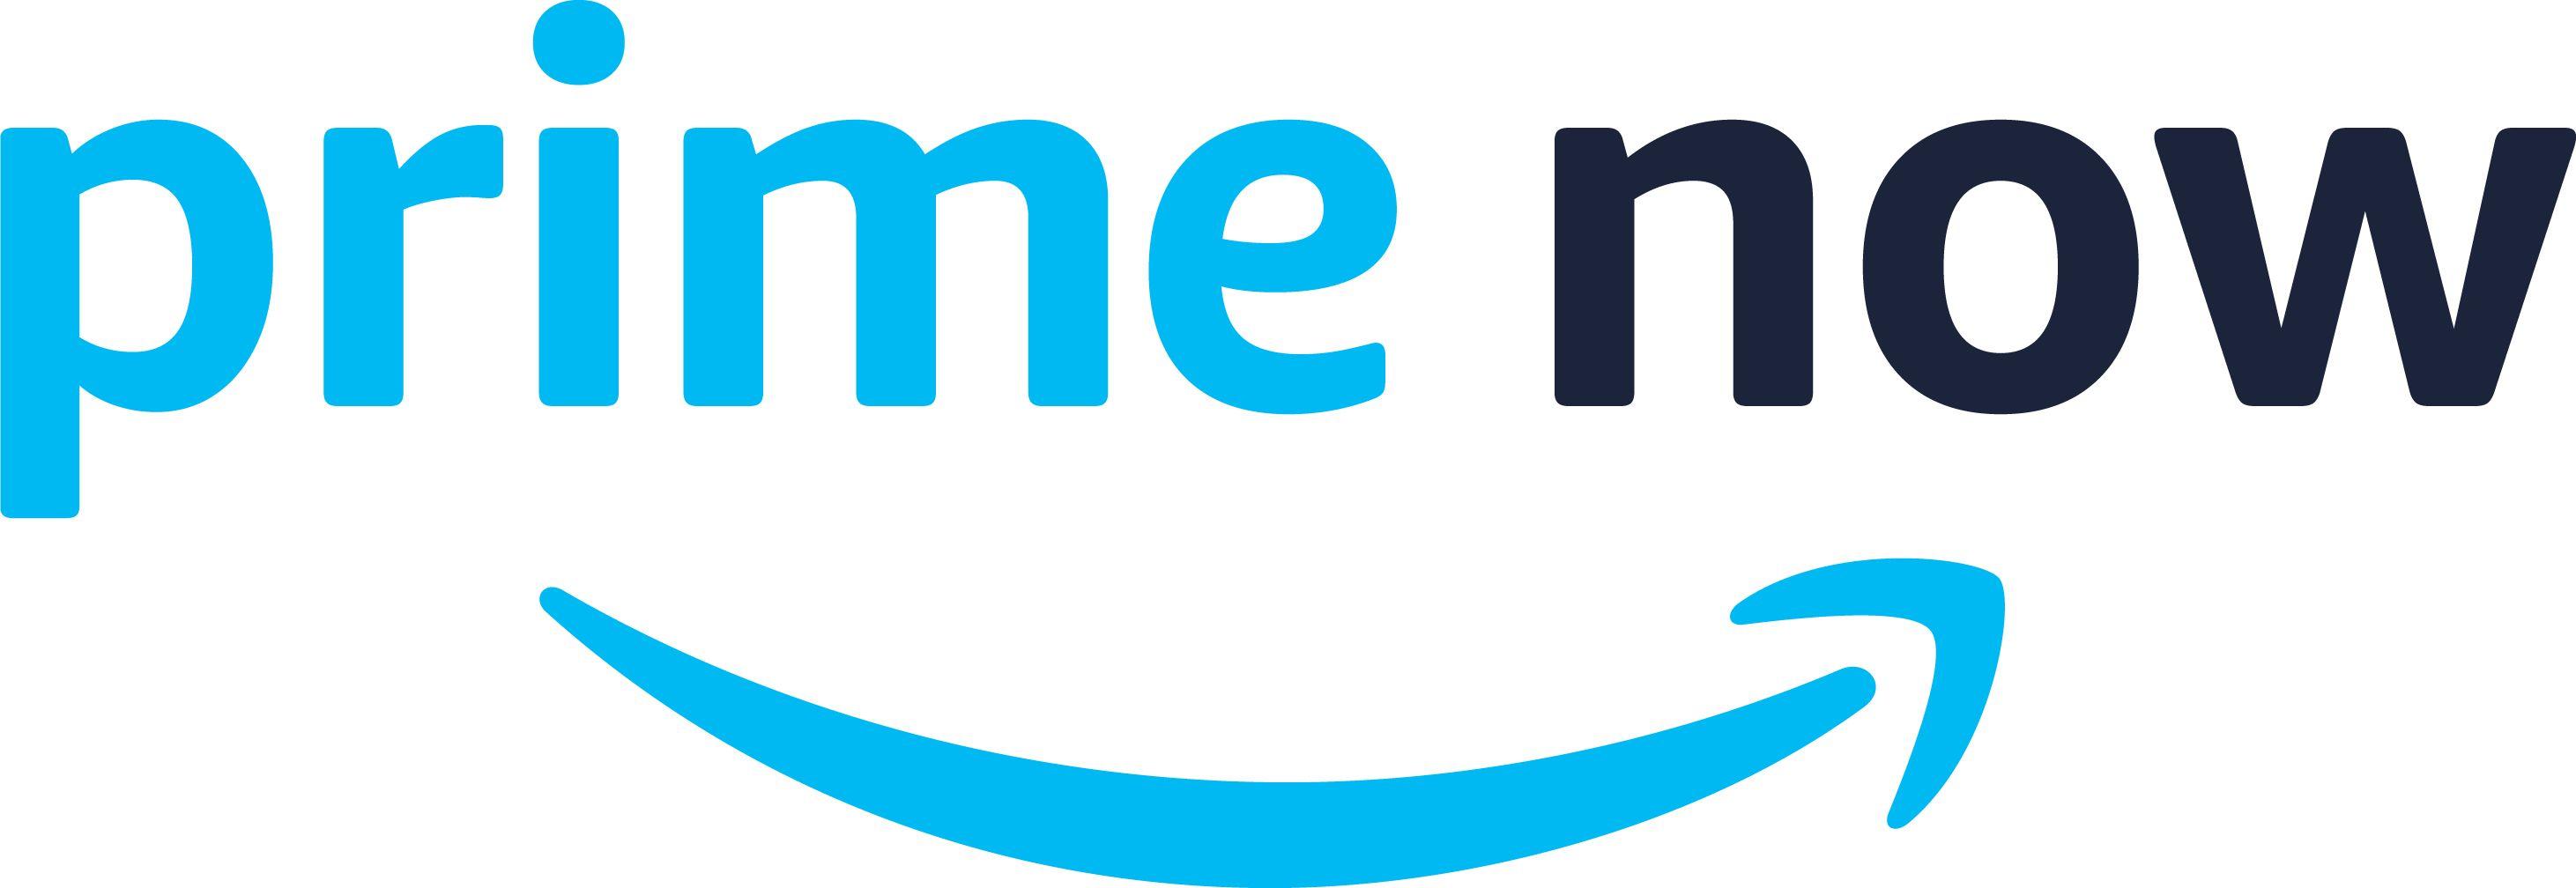 Amazon Corporate Logo - image and videos. Amazon.com, Inc